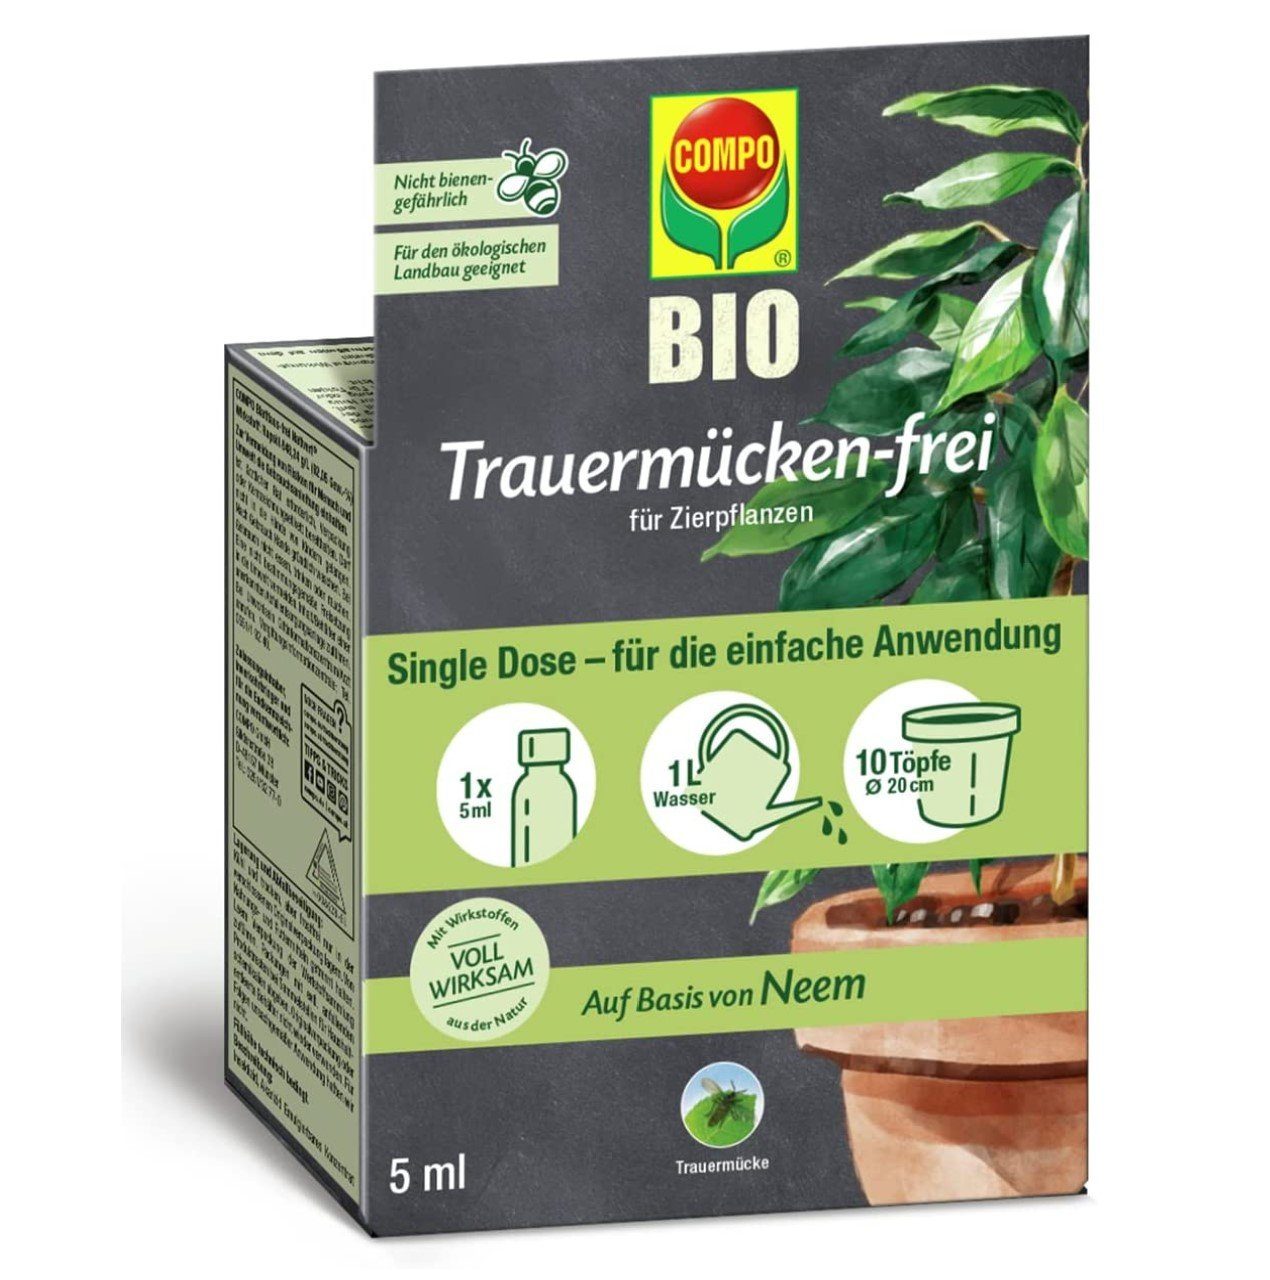 Compo Pflanzendünger COMPO BIO Trauermücken-frei, 5 ml